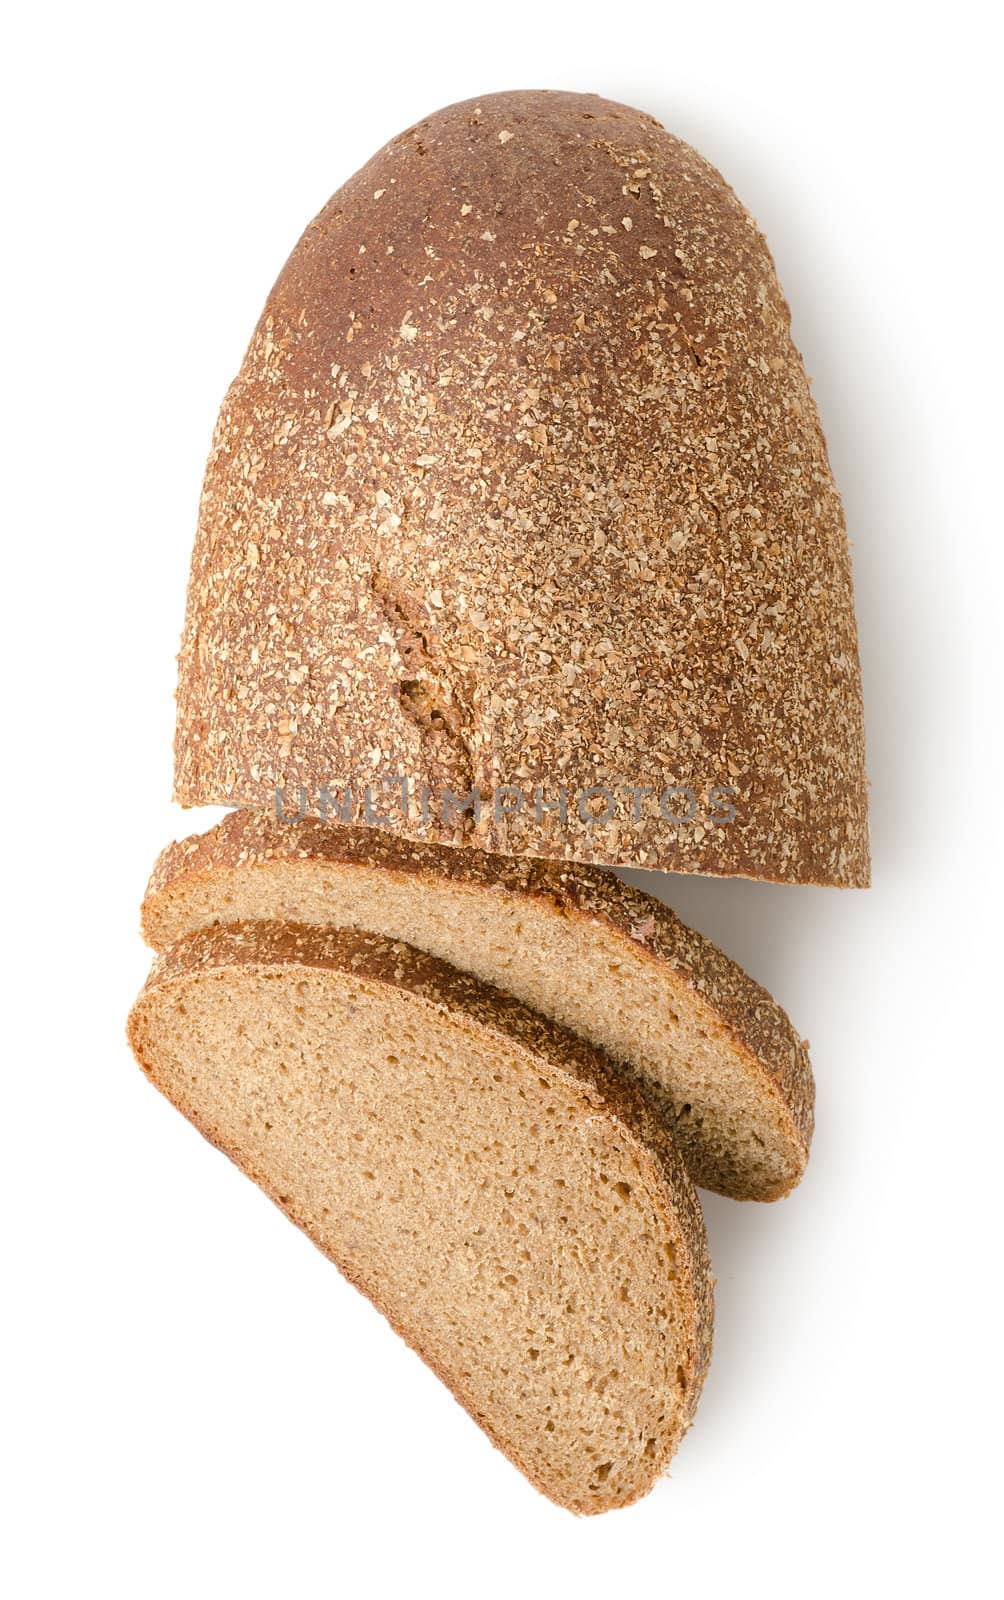 Rye bread by Givaga